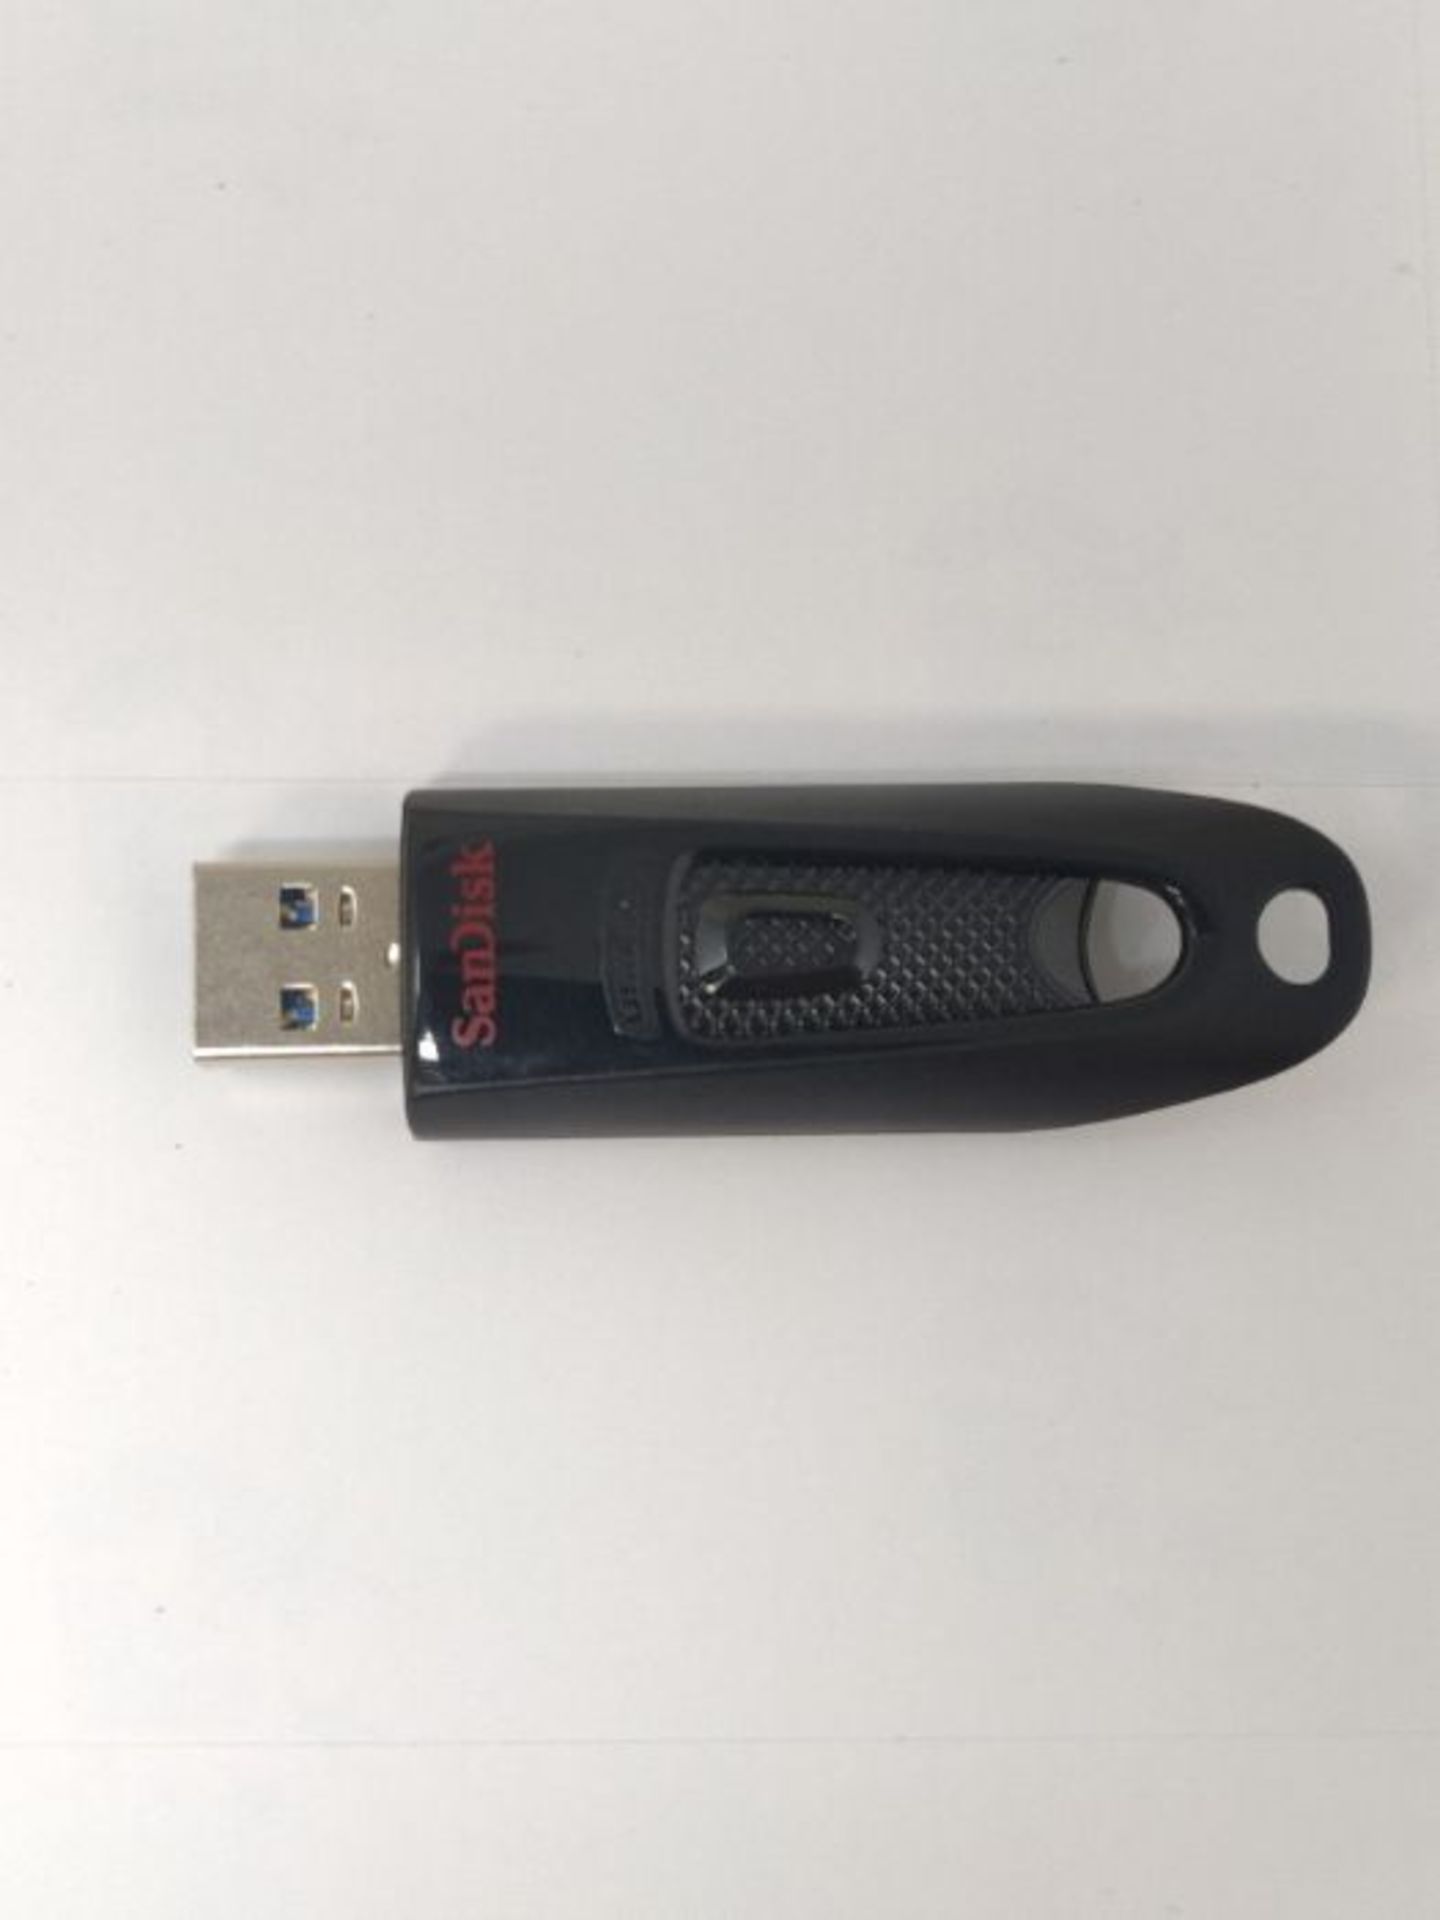 SanDisk Ultra 64 GB USB Flash Drive USB 3.0 Up to 130 MB/s Read, Black - Image 3 of 3